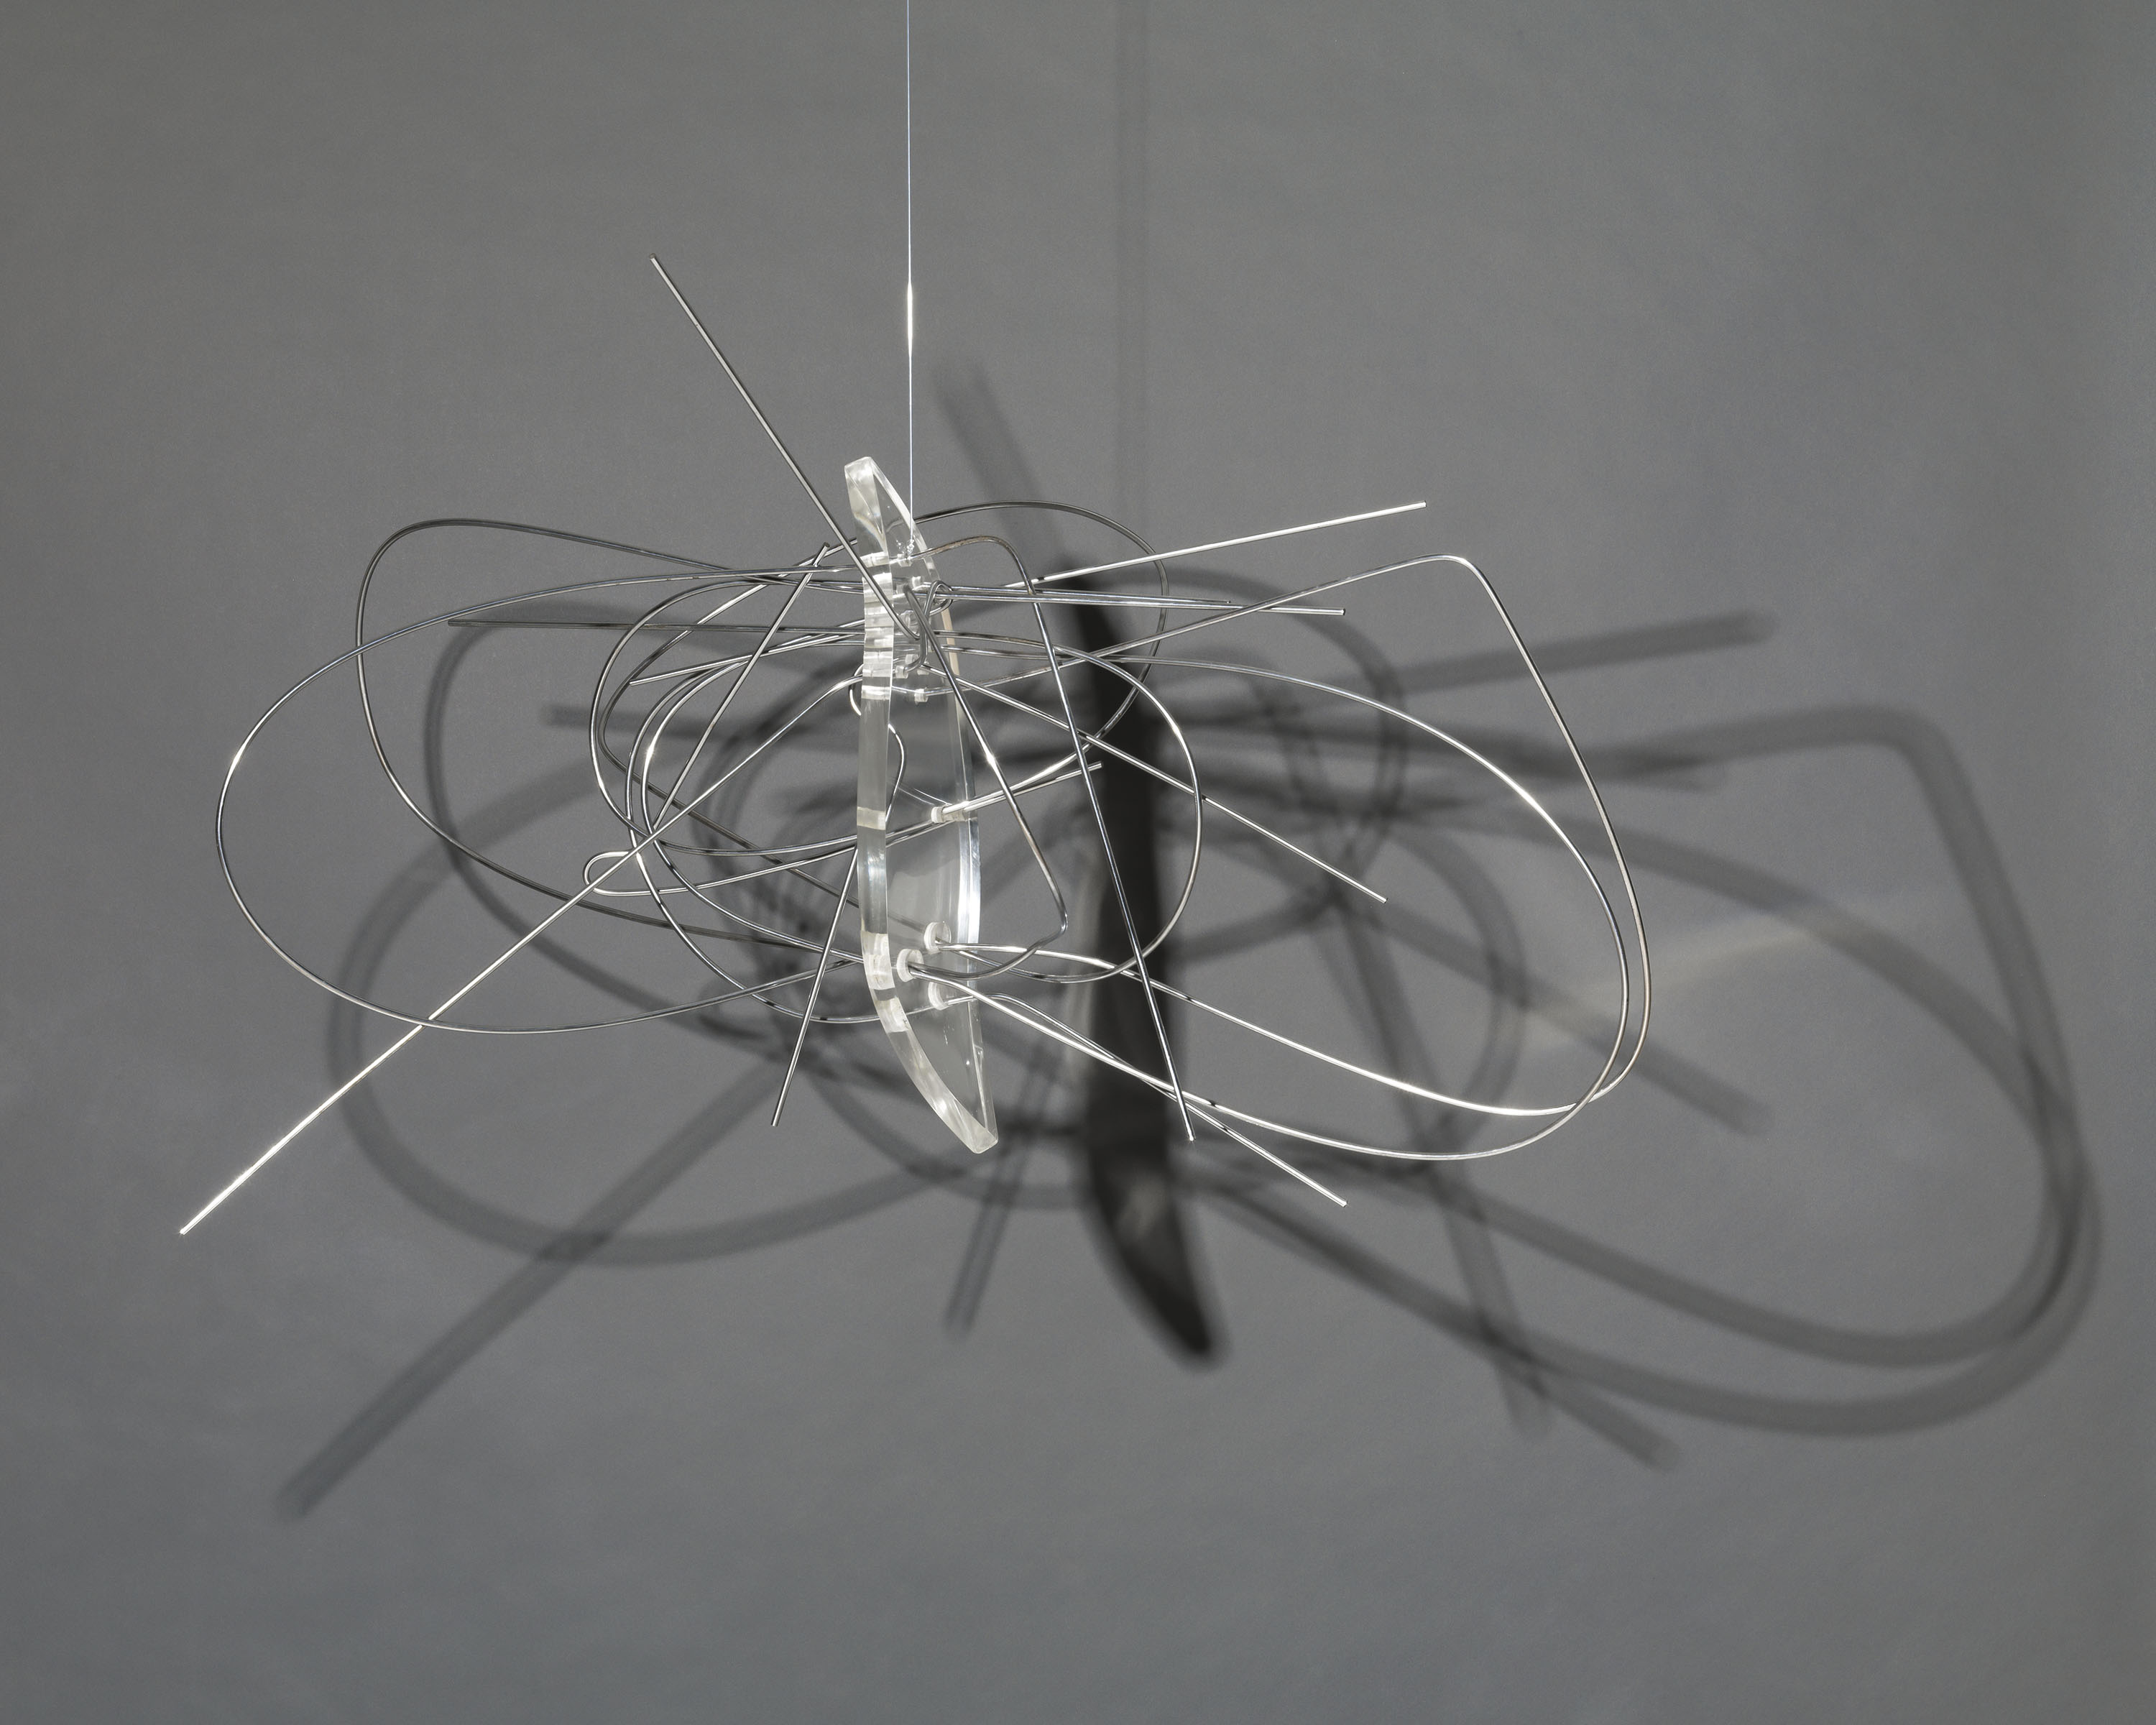 László Moholy-Nagy, “Dual Form with Chromium Rods,” 1946. Solomon R. Guggenheim Museum, New York, Solomon R. Guggenheim Founding Collection, 48.1149. © 2016 Hattula Moholy-Nagy/VG Bild-Kunst, Bonn/Artists Rights Society (ARS), New York. Image courtesy theArt Institute of Chicago.